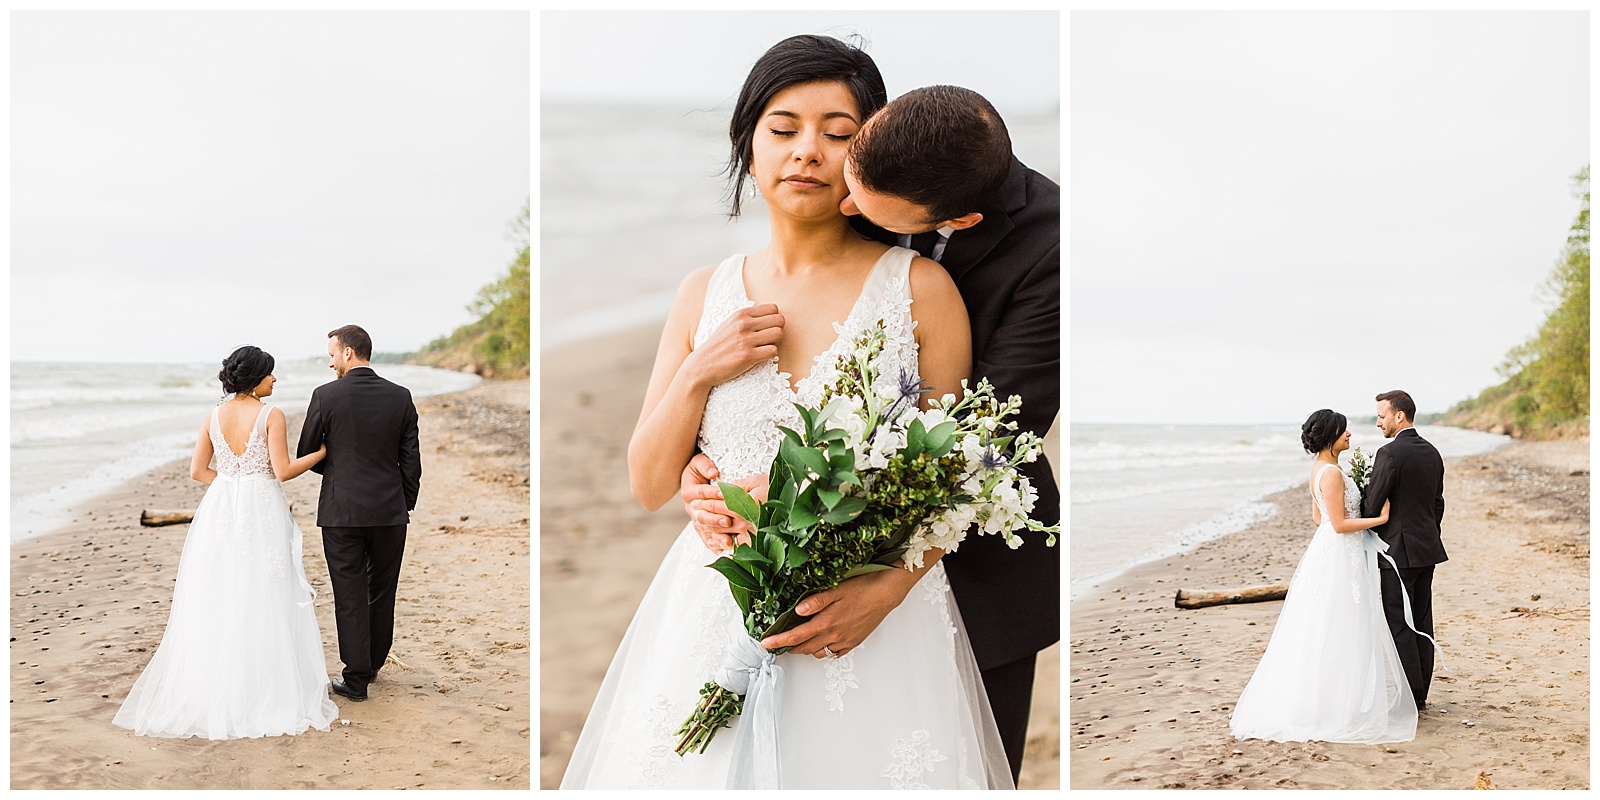 Groom kisses bride's neck during Northern Michigan beach wedding.